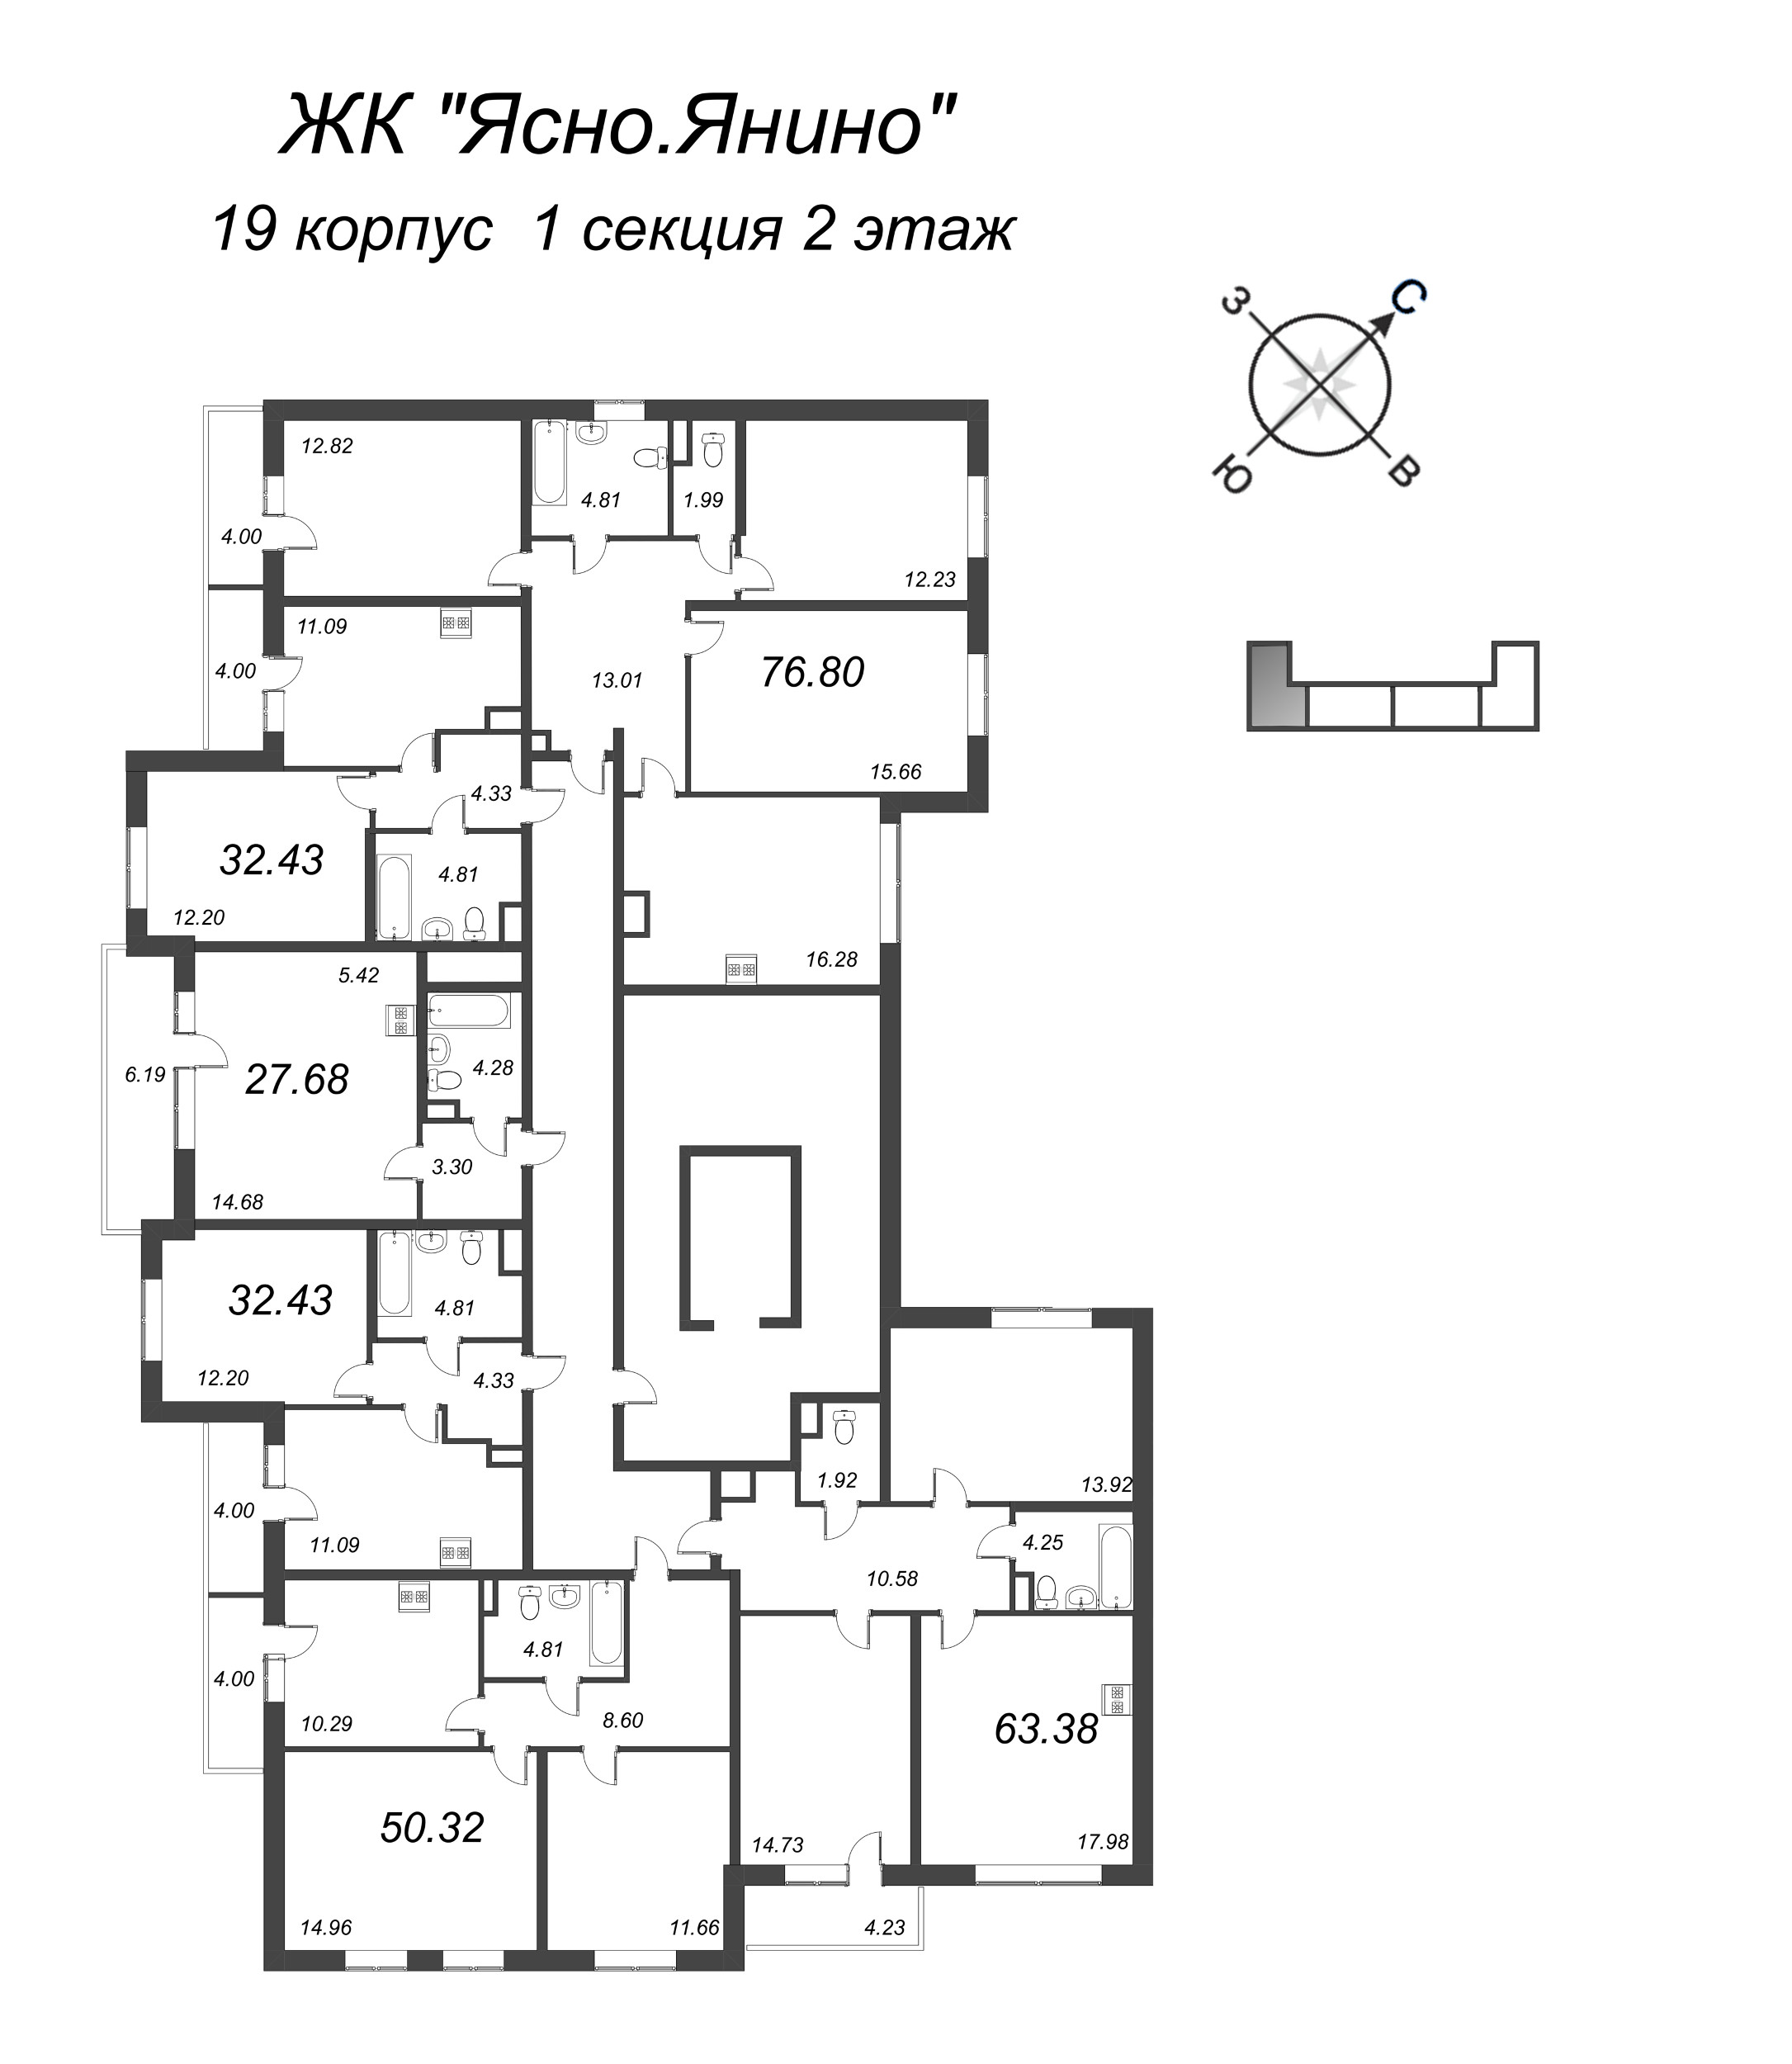 3-комнатная (Евро) квартира, 63.38 м² - планировка этажа